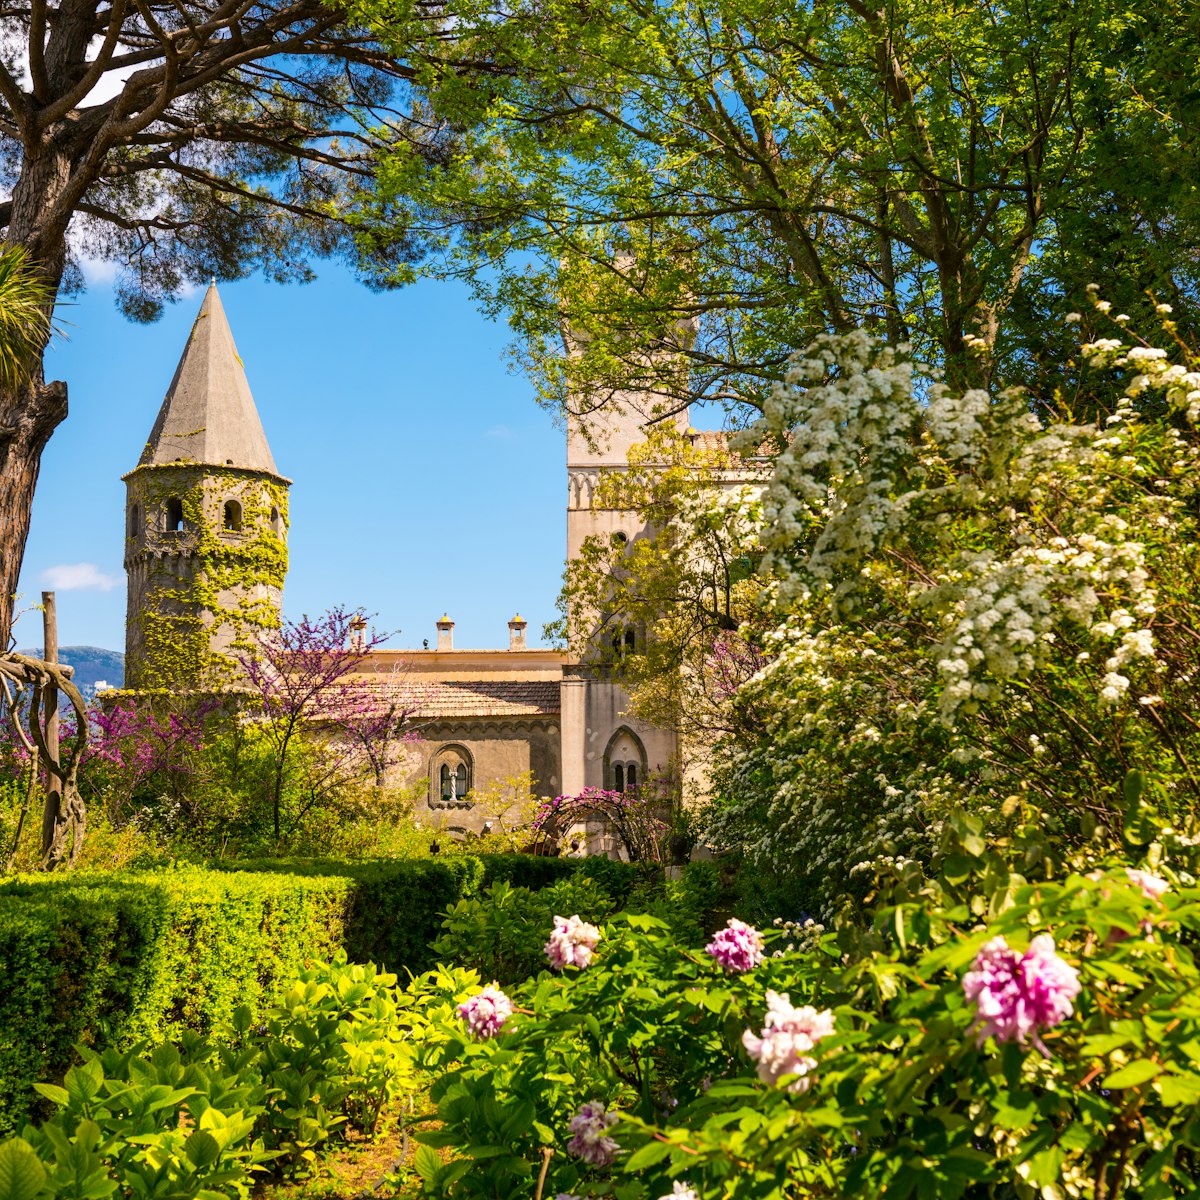 View of the Villa Cimbrone with garden, Amalfi coast, Italy.
1189177206